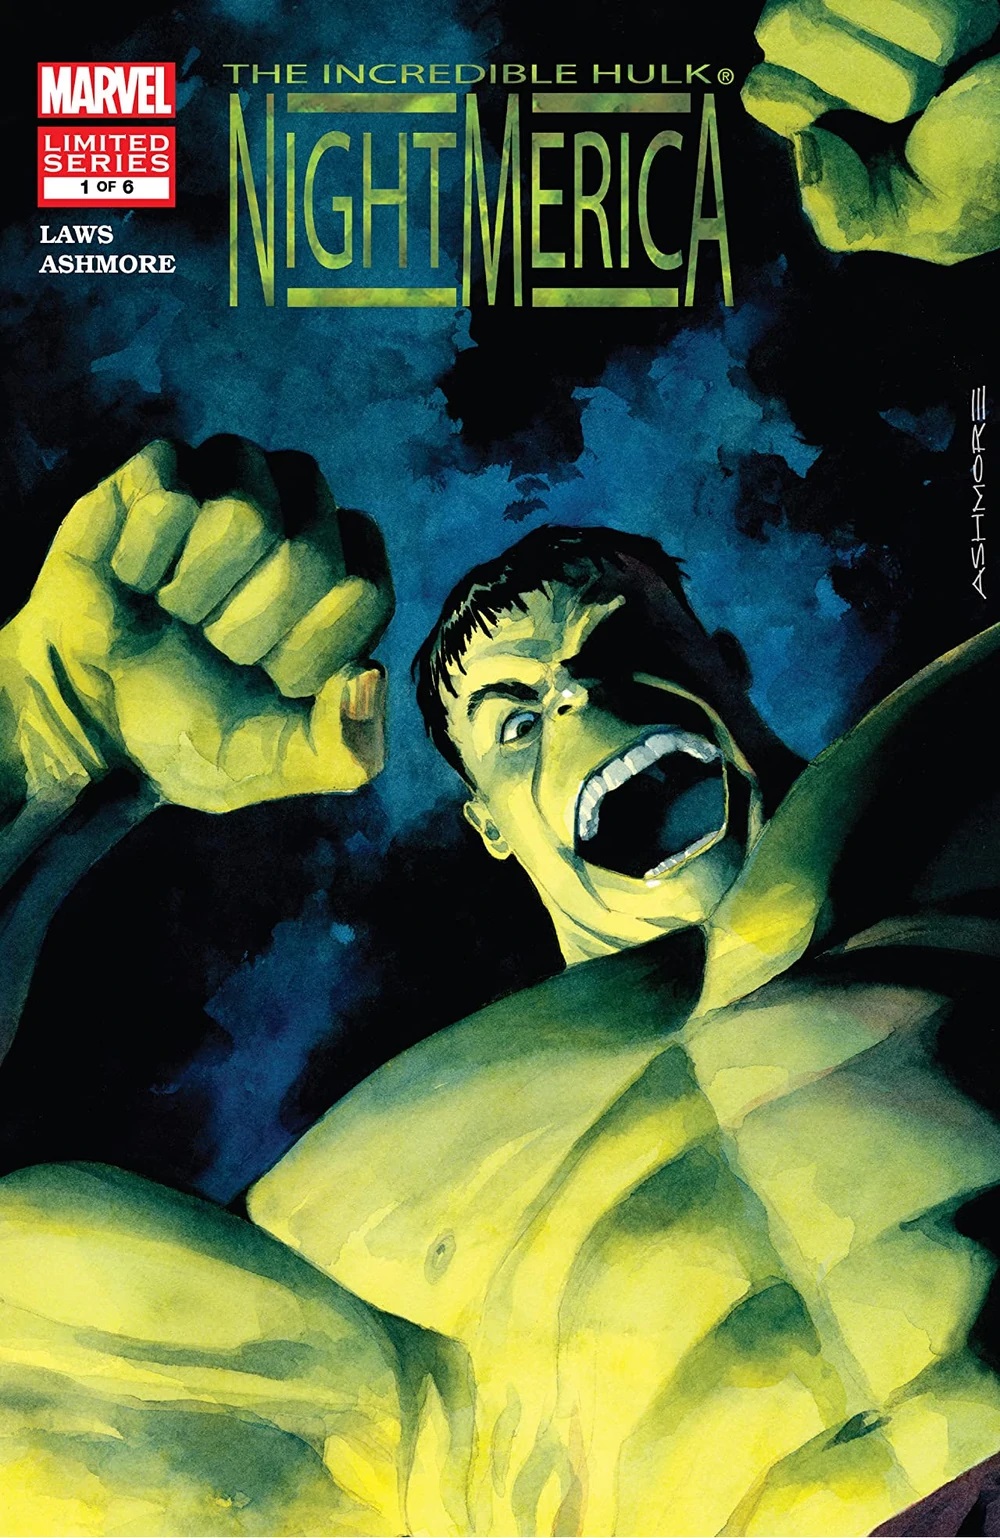 The Incredible Hulk: Nightmerica Limited Series Bundle Issues 1-6